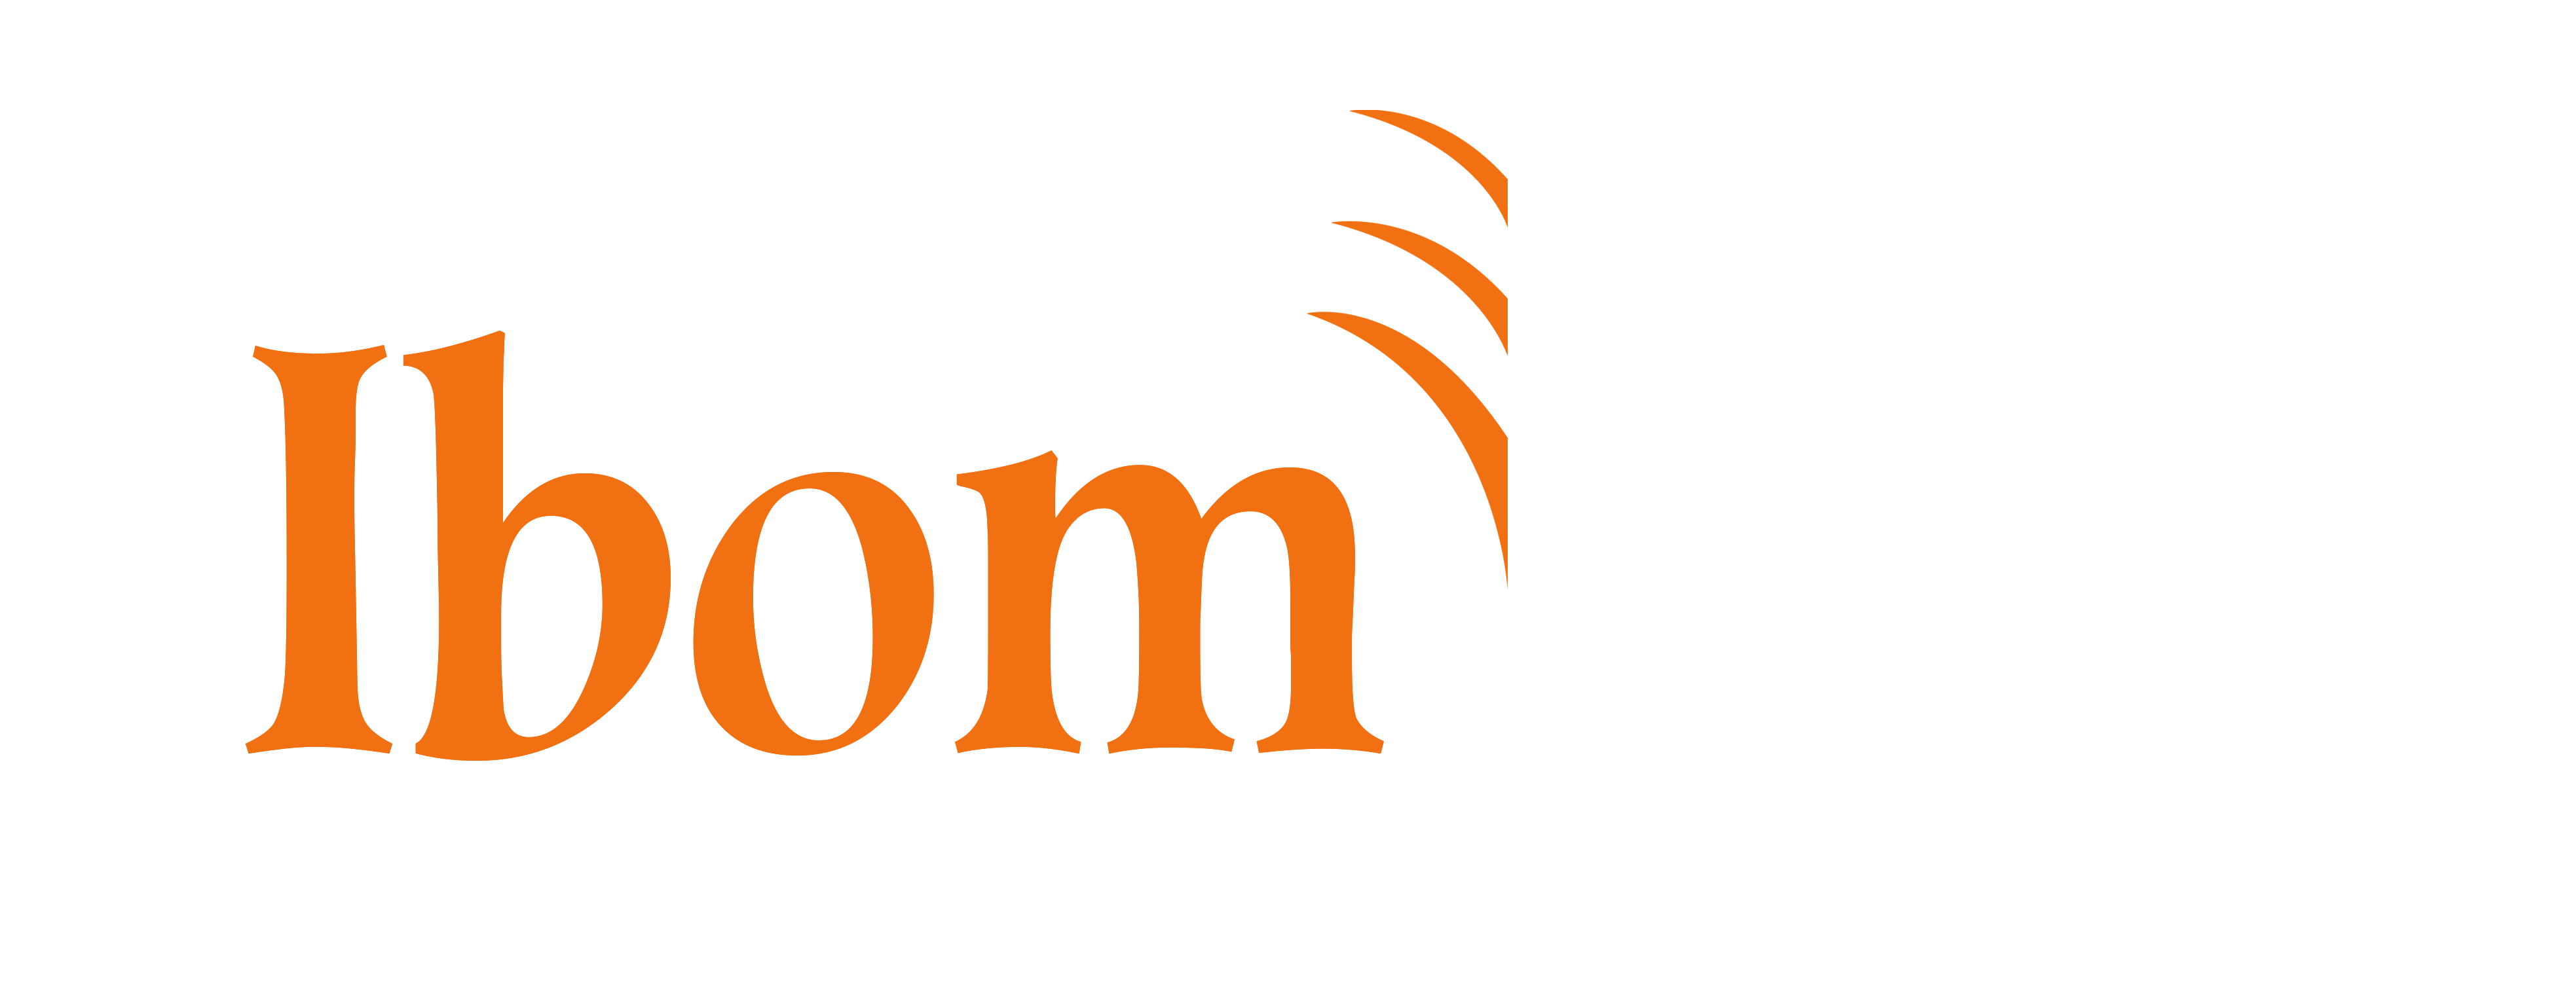 Ibom Air logo